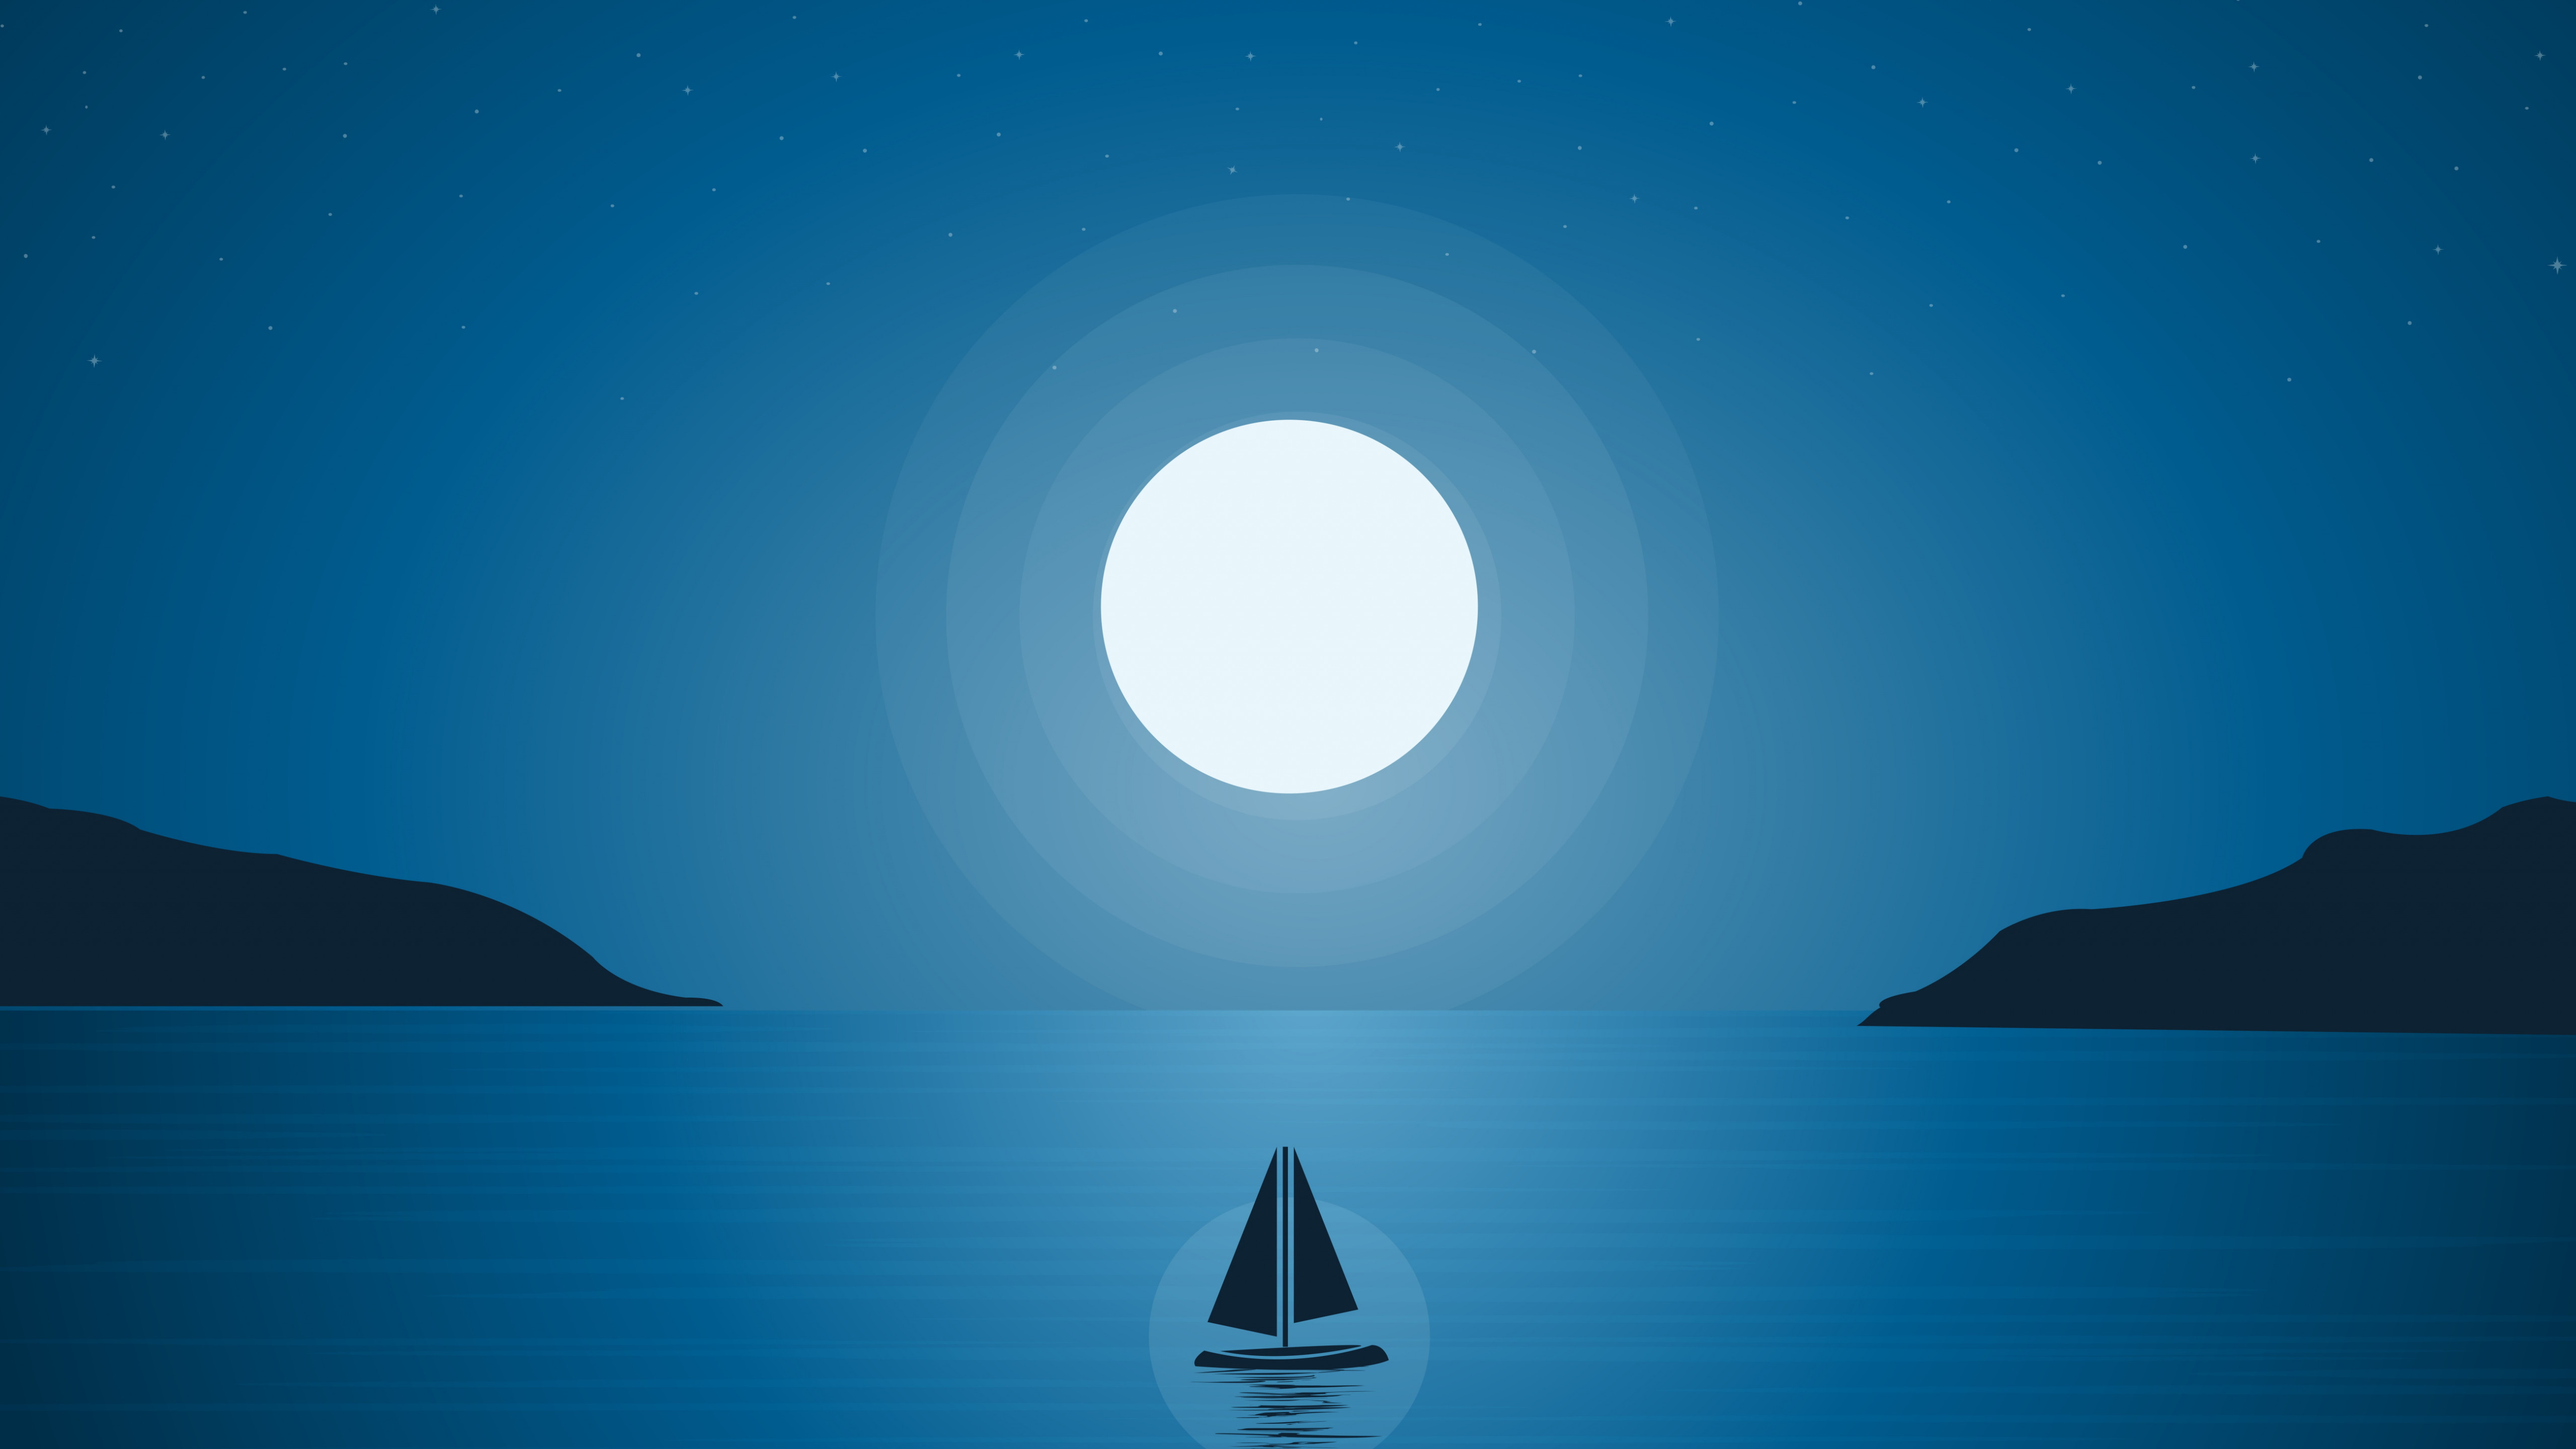 Boat trip under the moonlight wallpaper 5120x2880